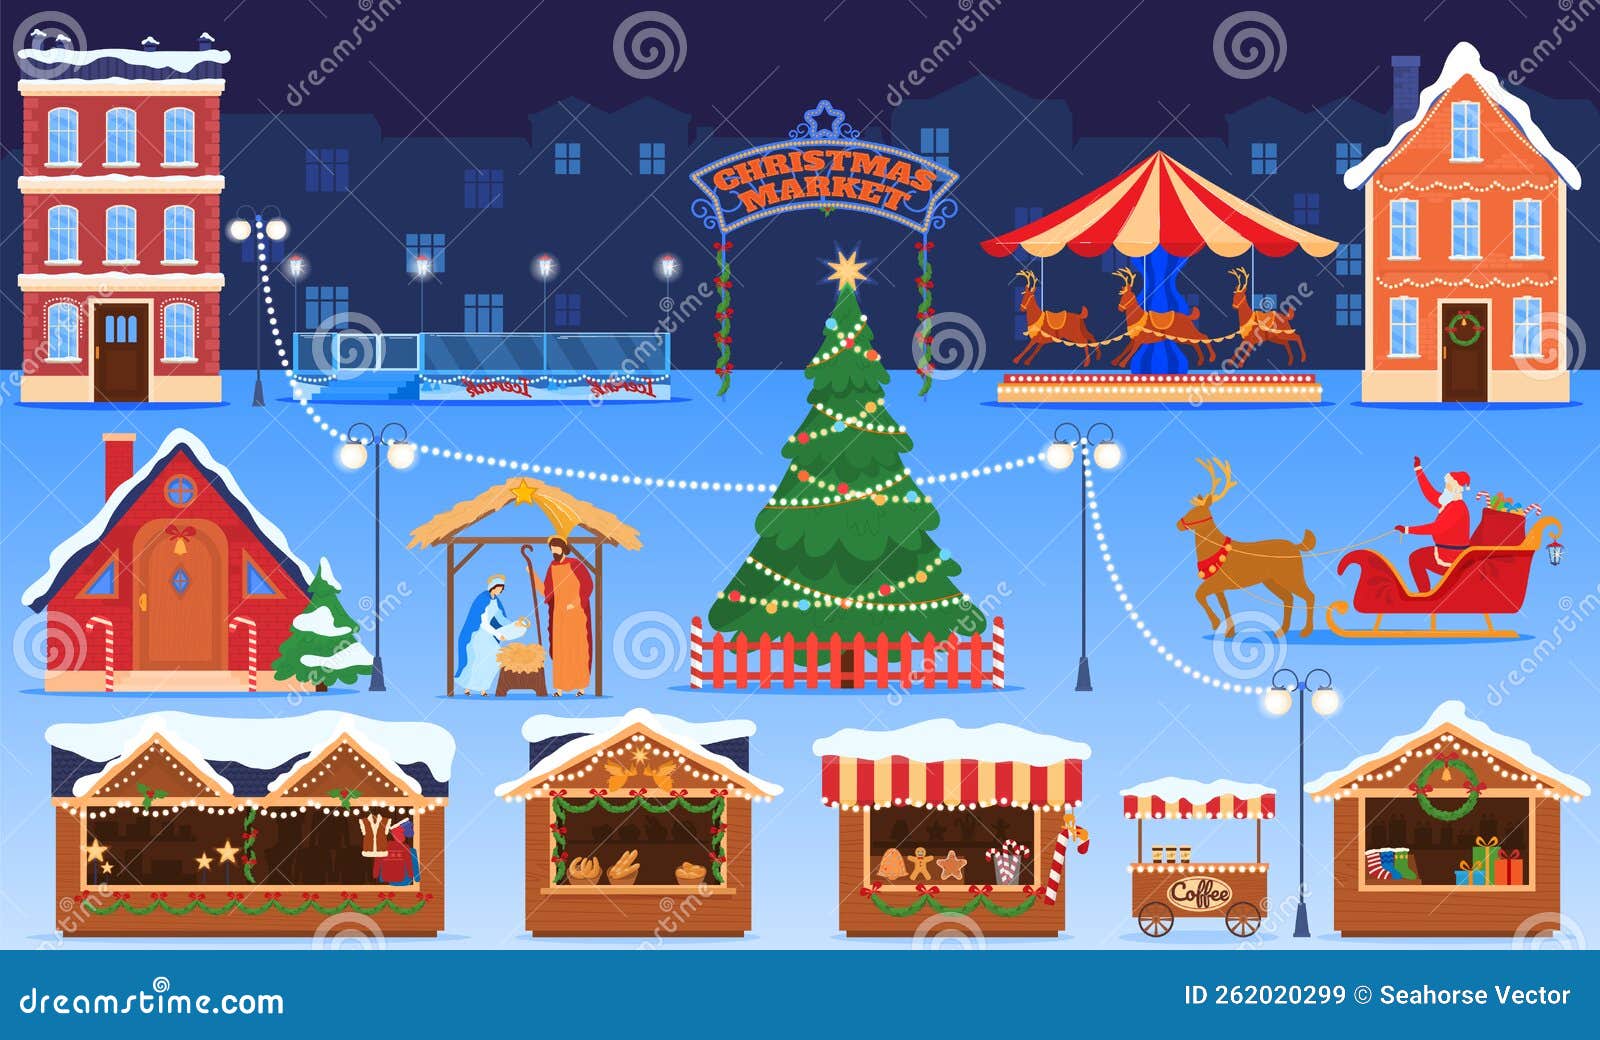 Christmas Market Fair Decoration and Kiosk, Holiday Street Outdoor ...